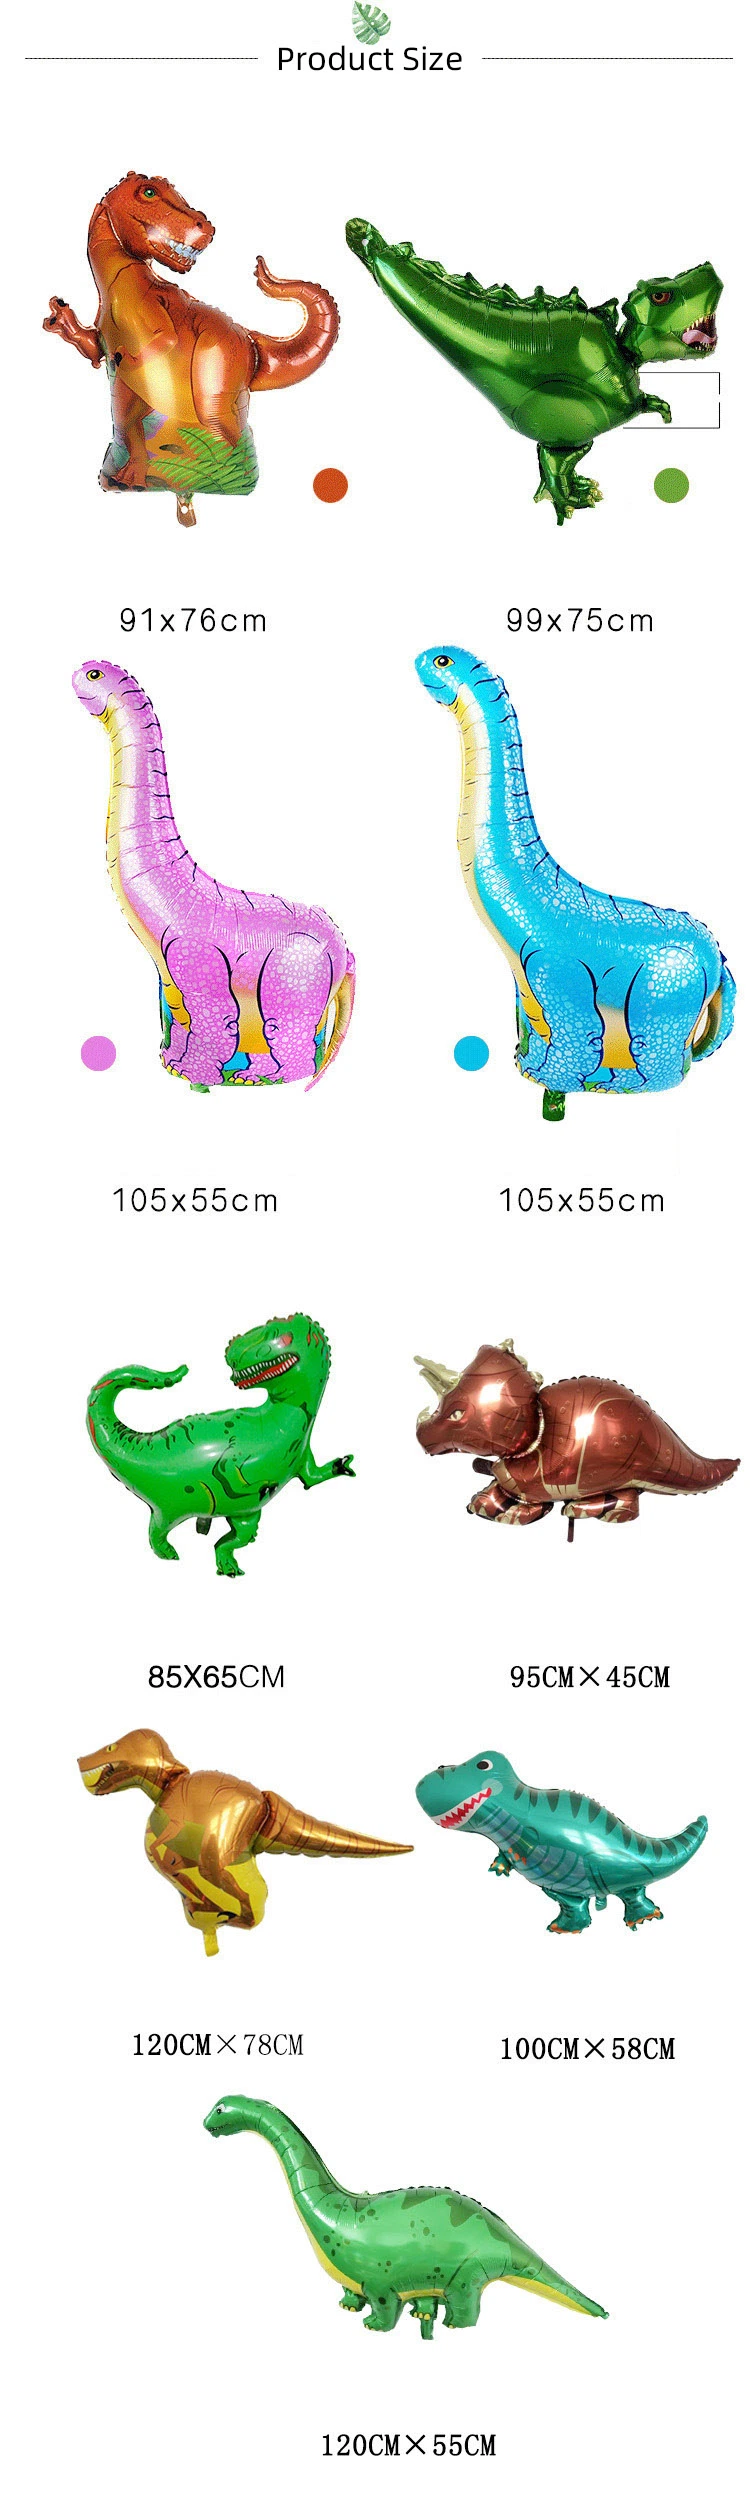 Holesale Large Quantities of Dinosaur Brontosaurus Tyrannosaurus Rex Balloons